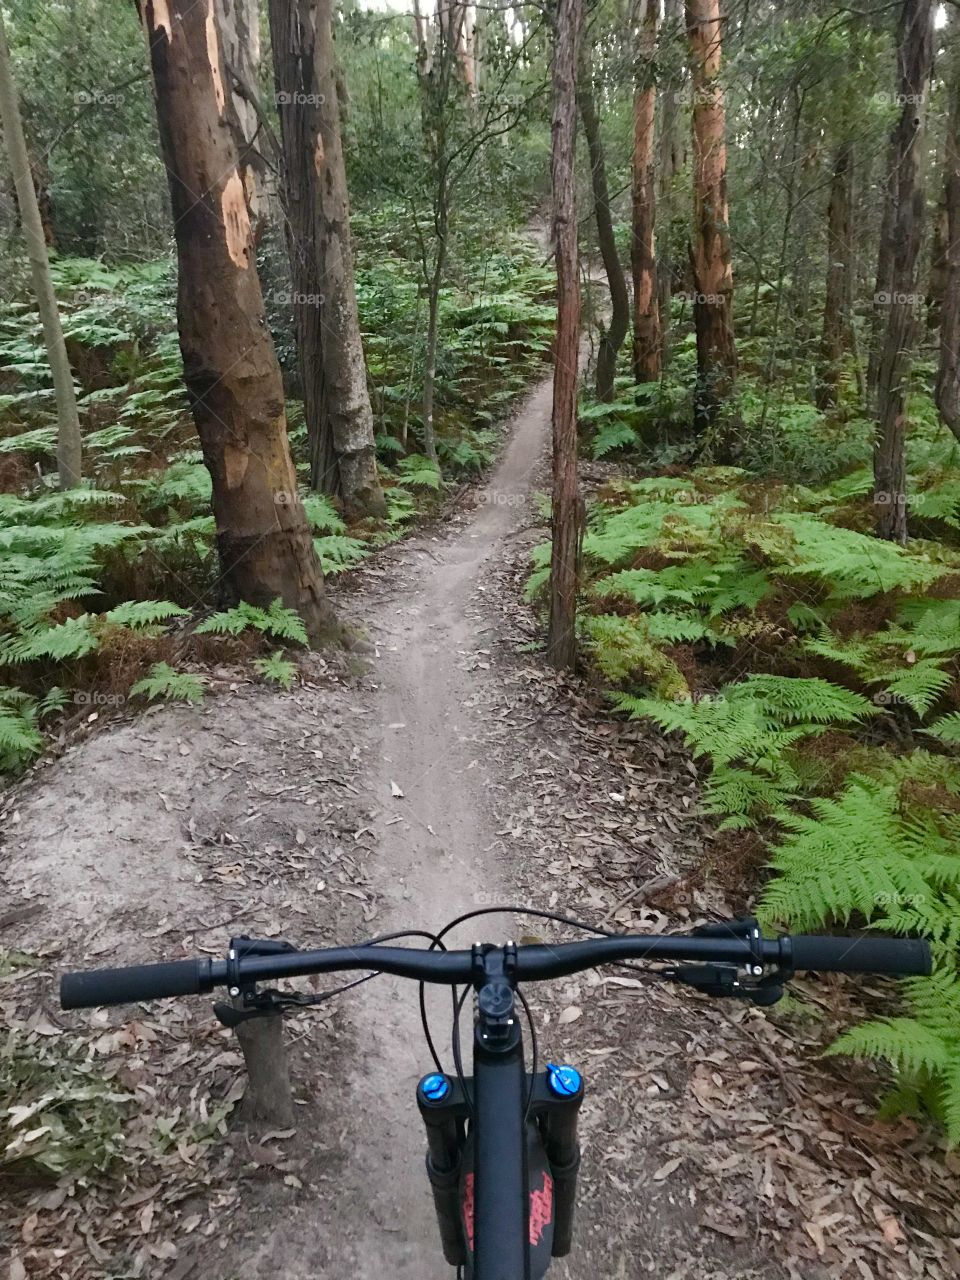 Early morning mountain bike ride, Glenrock Reserve, Newcastle NSW Australia 